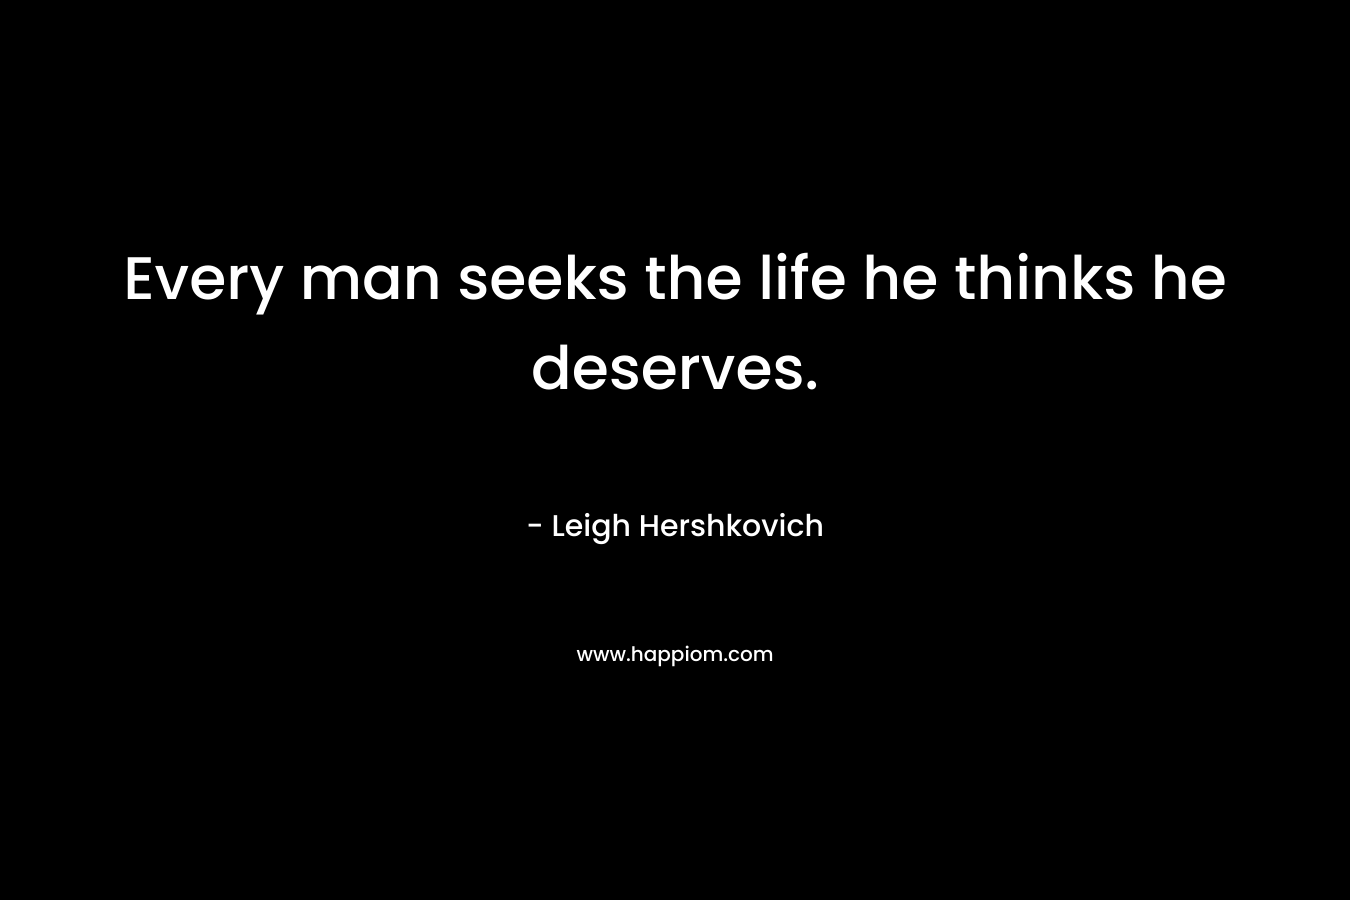 Every man seeks the life he thinks he deserves. – Leigh Hershkovich